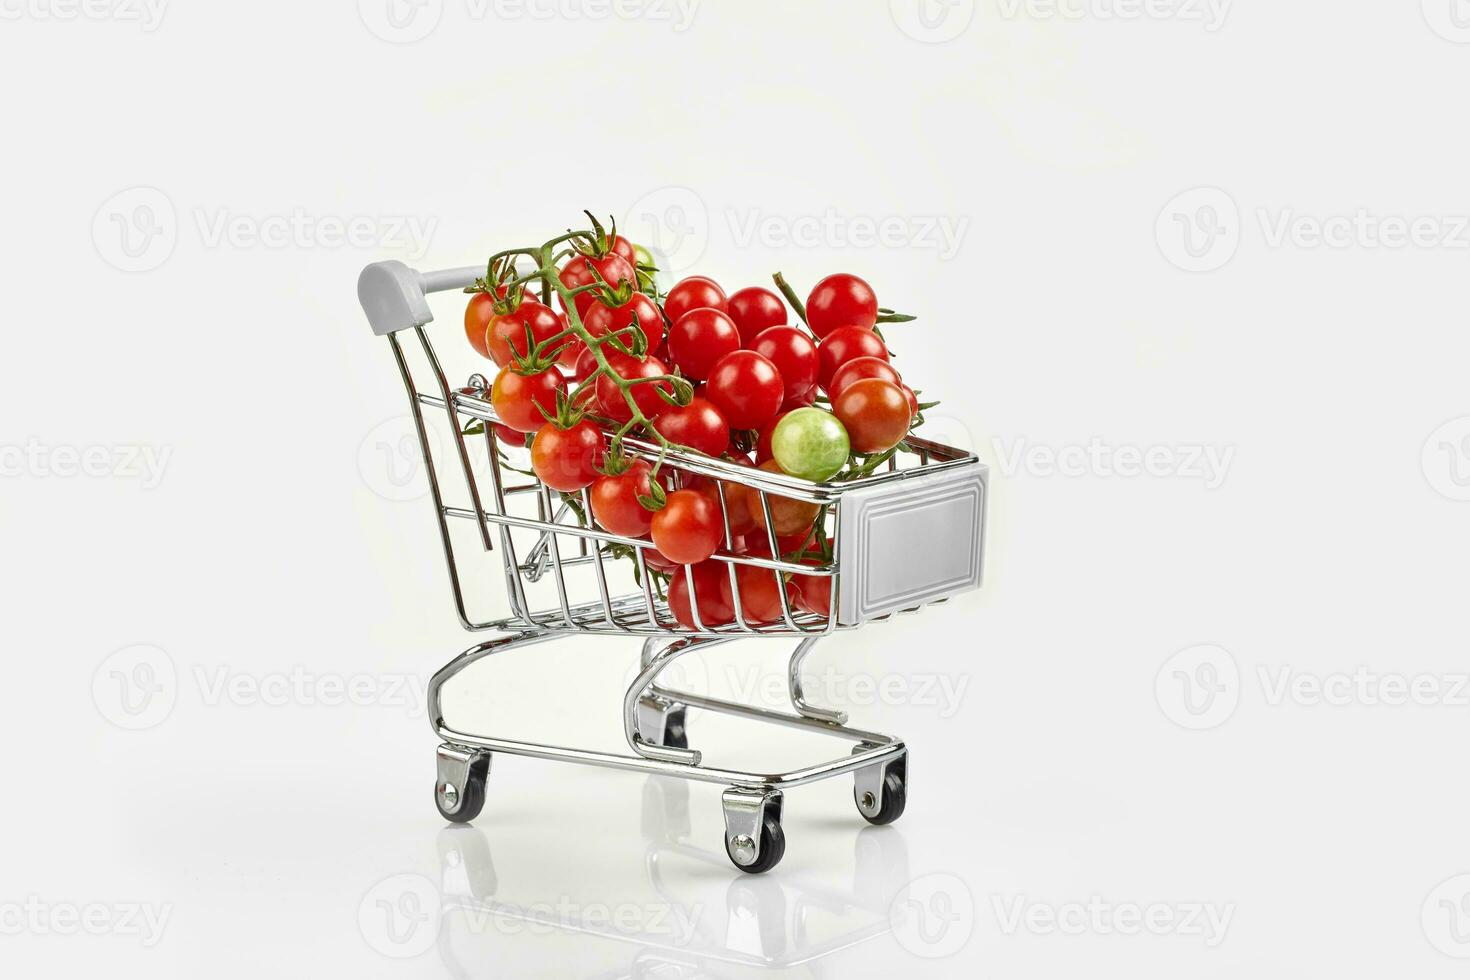 Mini shopping cart full with cherry tomatos on white background photo